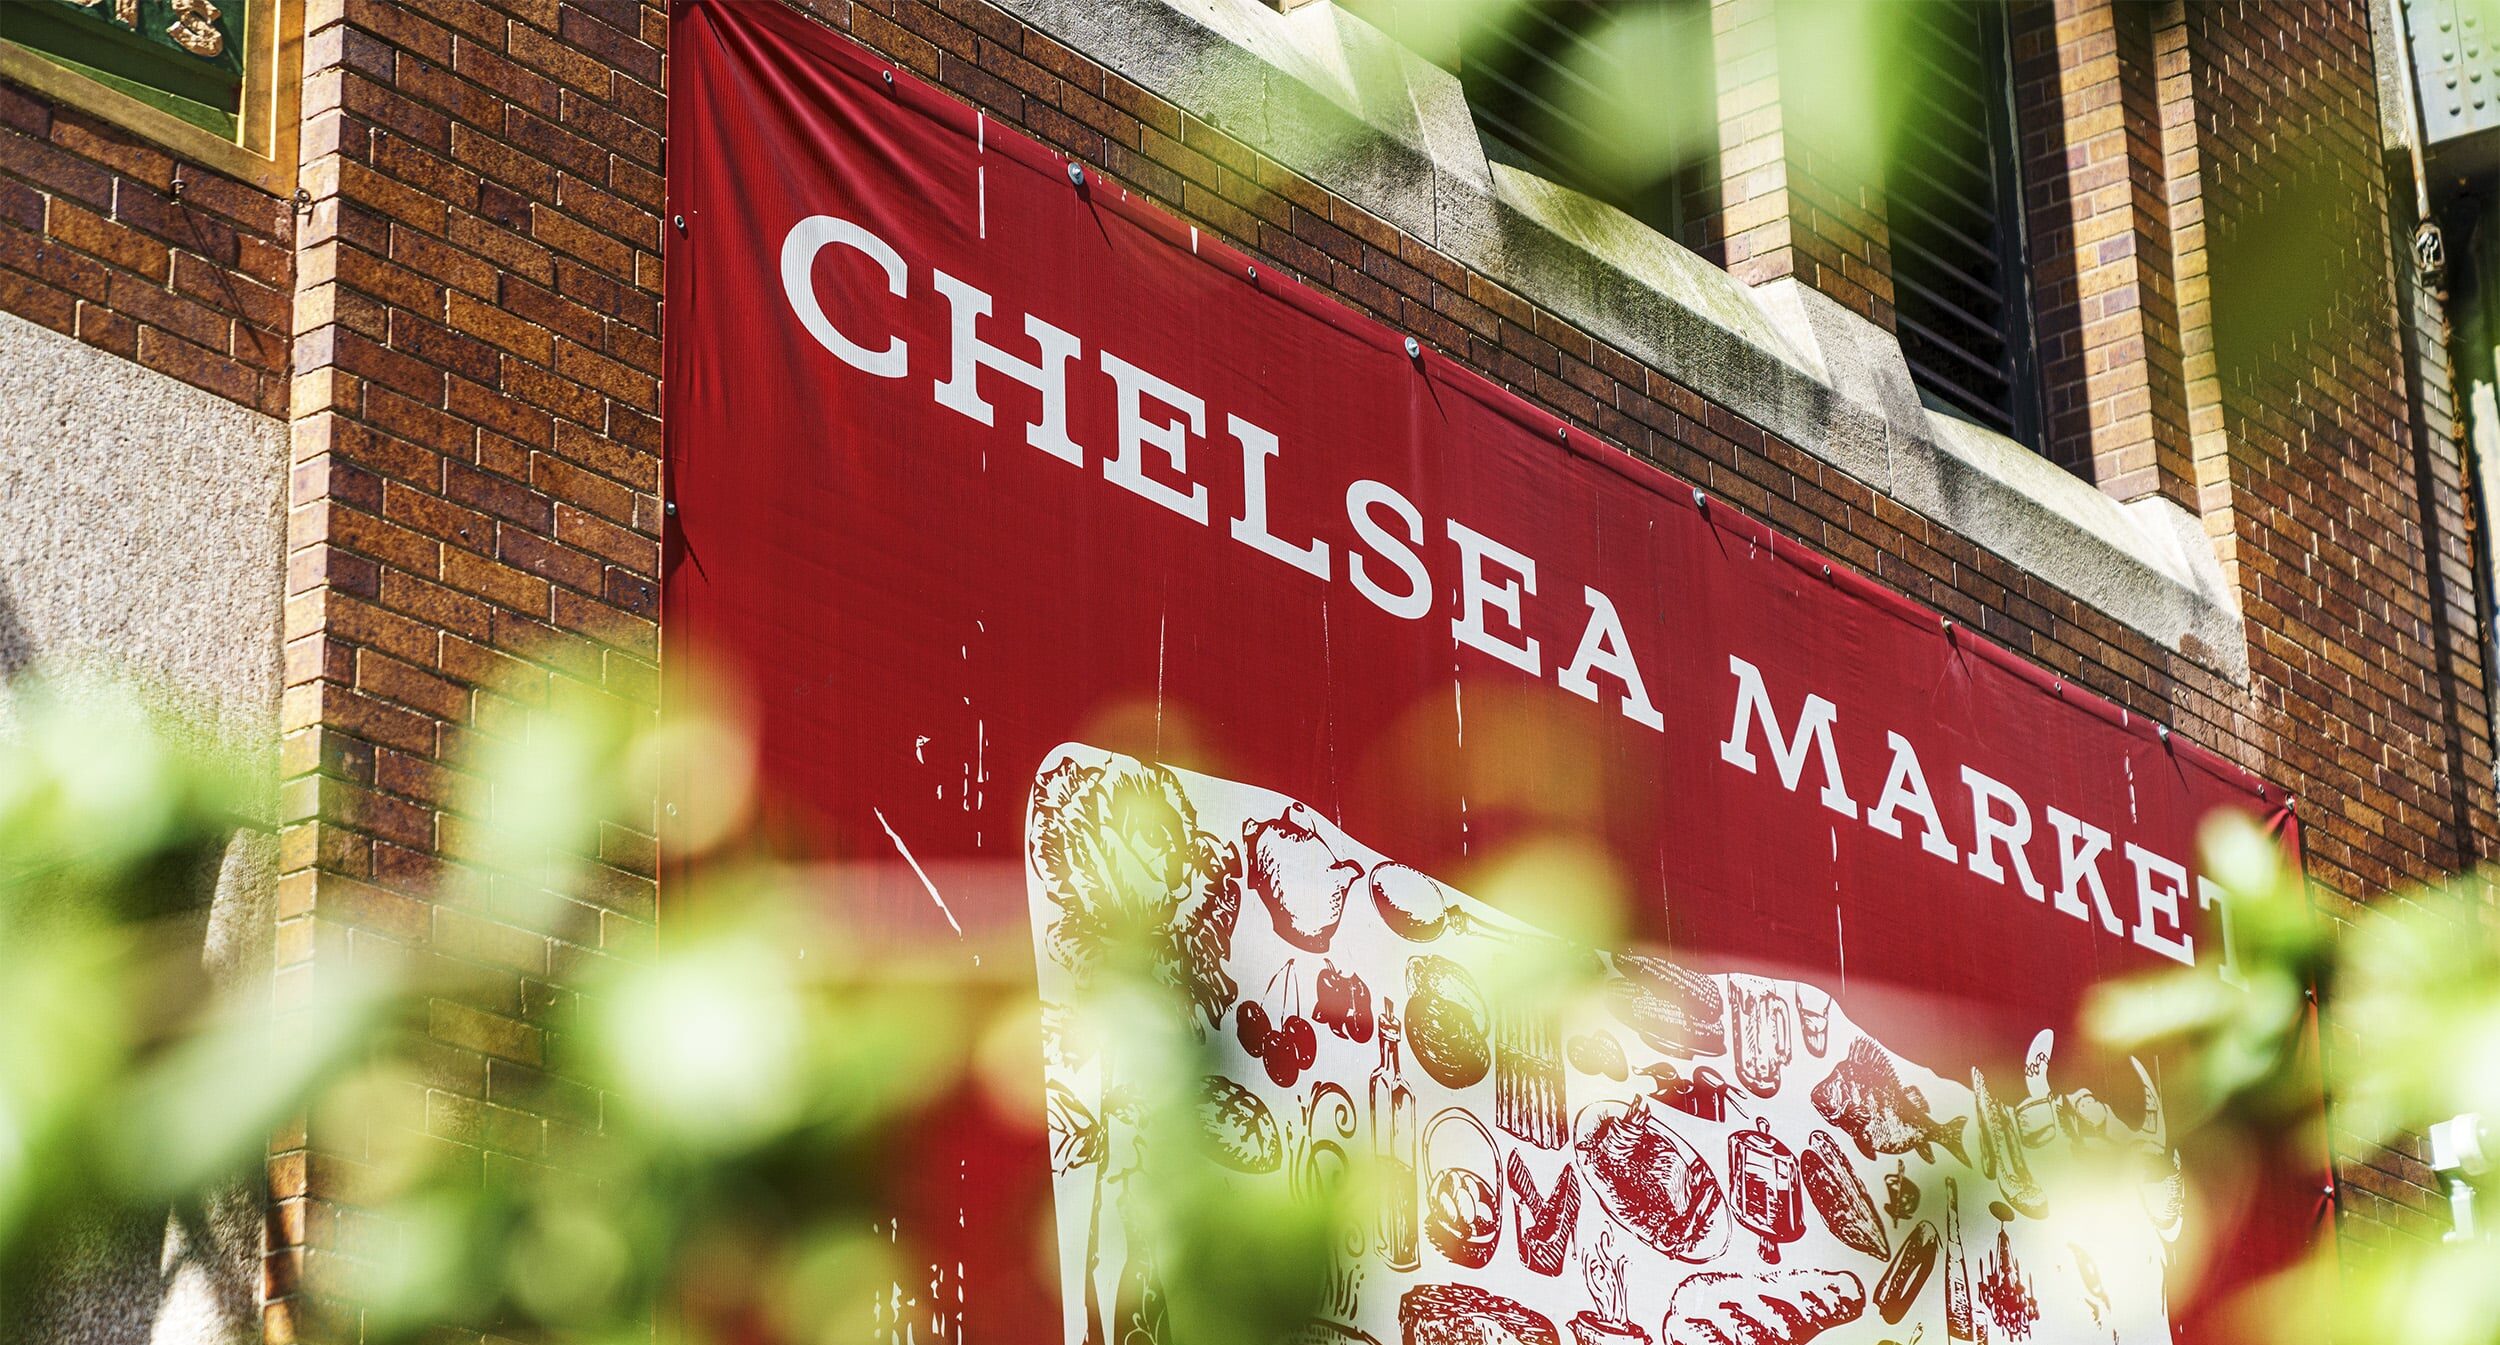 Signage for Chelsea Market.